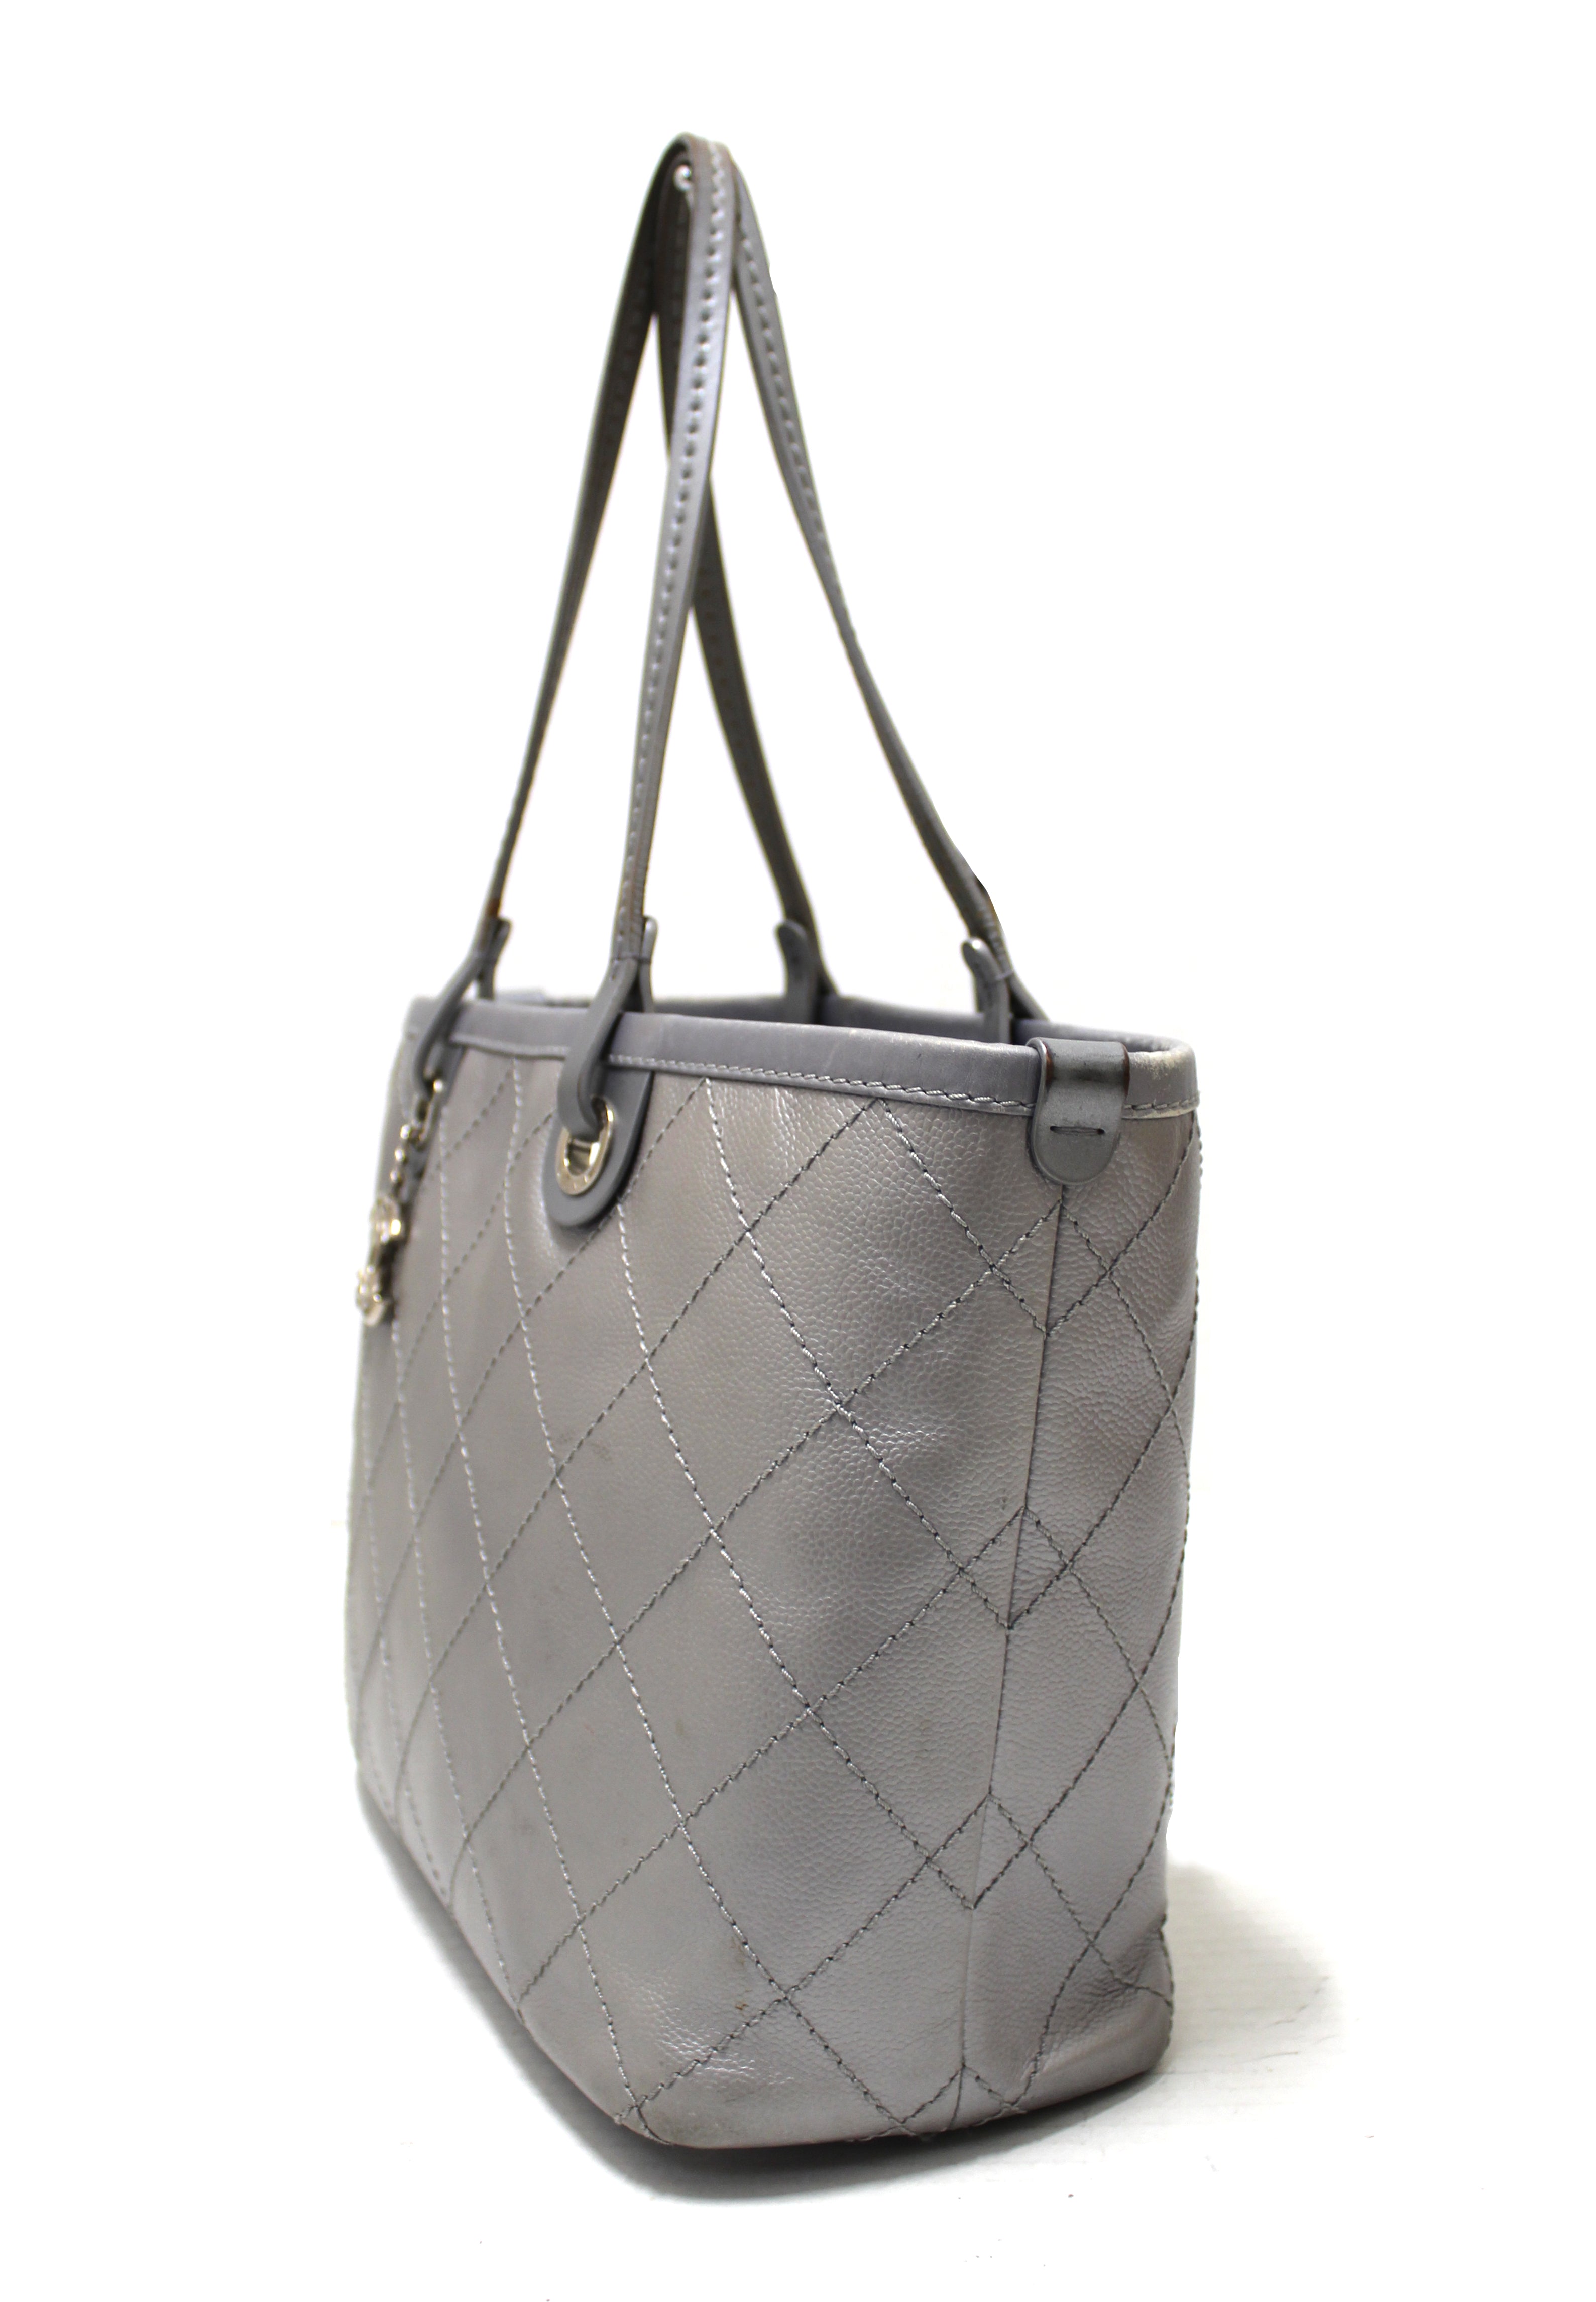 Chanel Classic Double Flap Bag Woven Metallic Raffia Medium